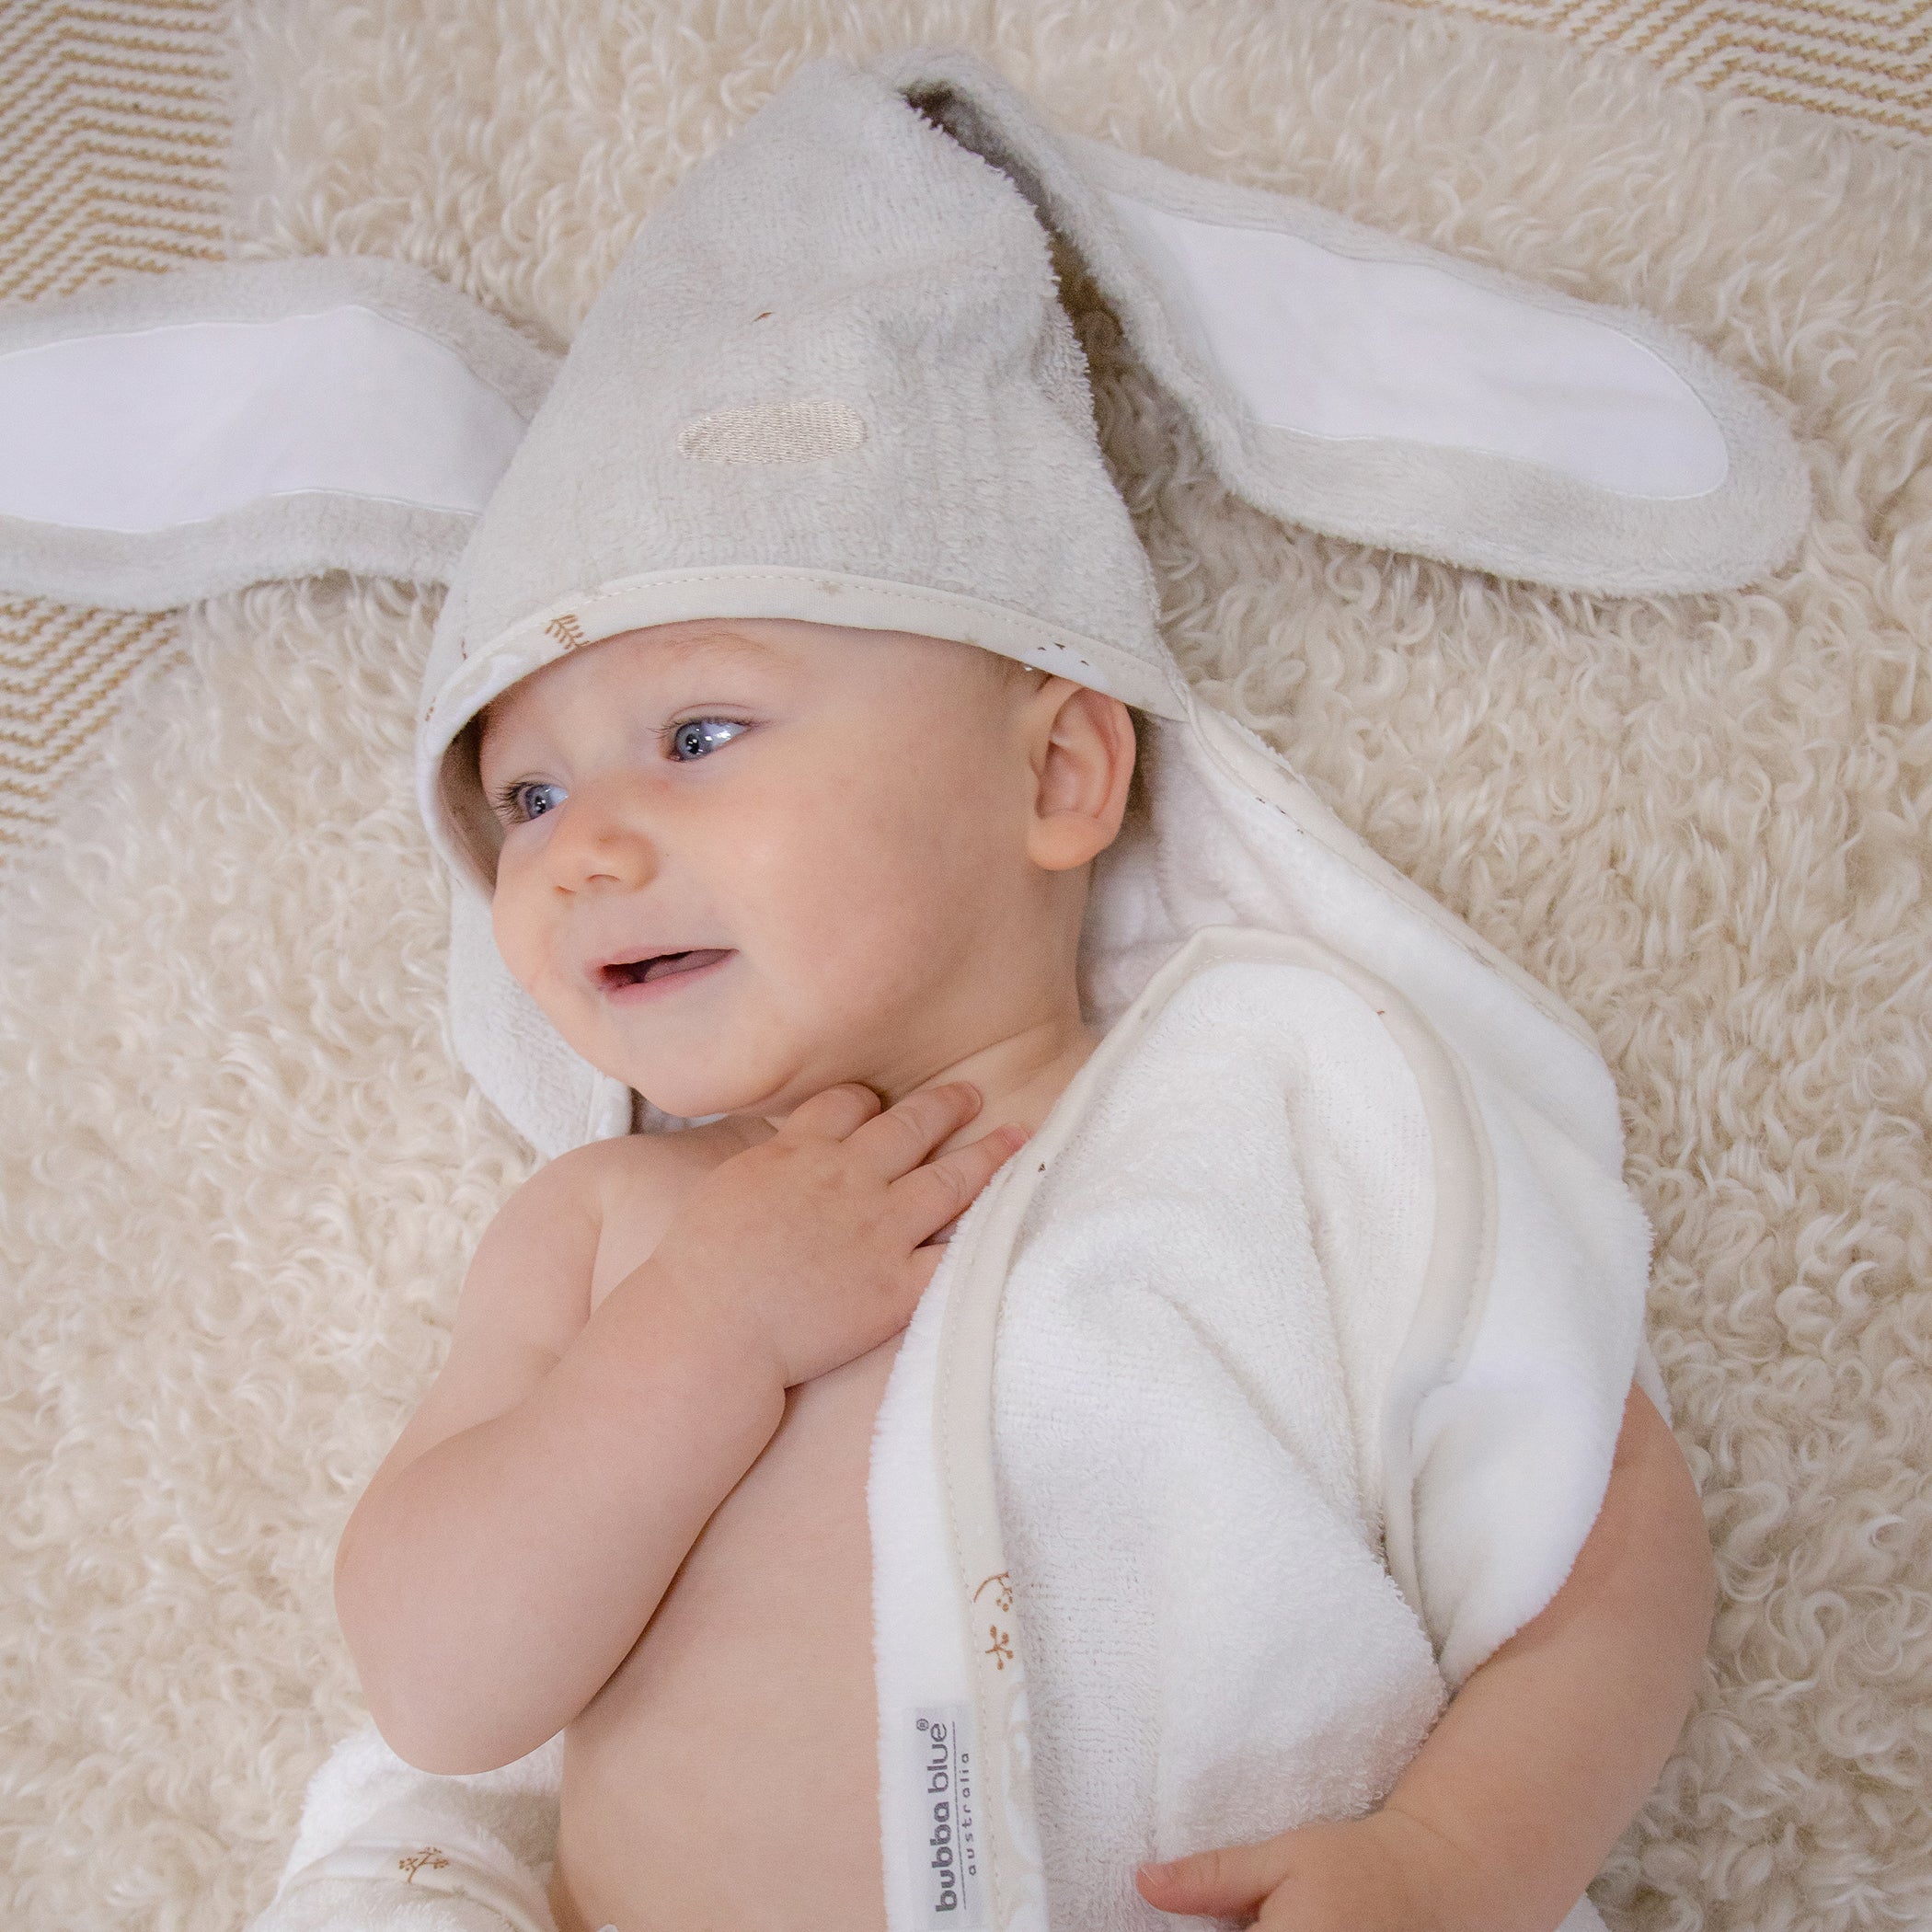 Bunny Dreams Novelty Hooded Bath Towel